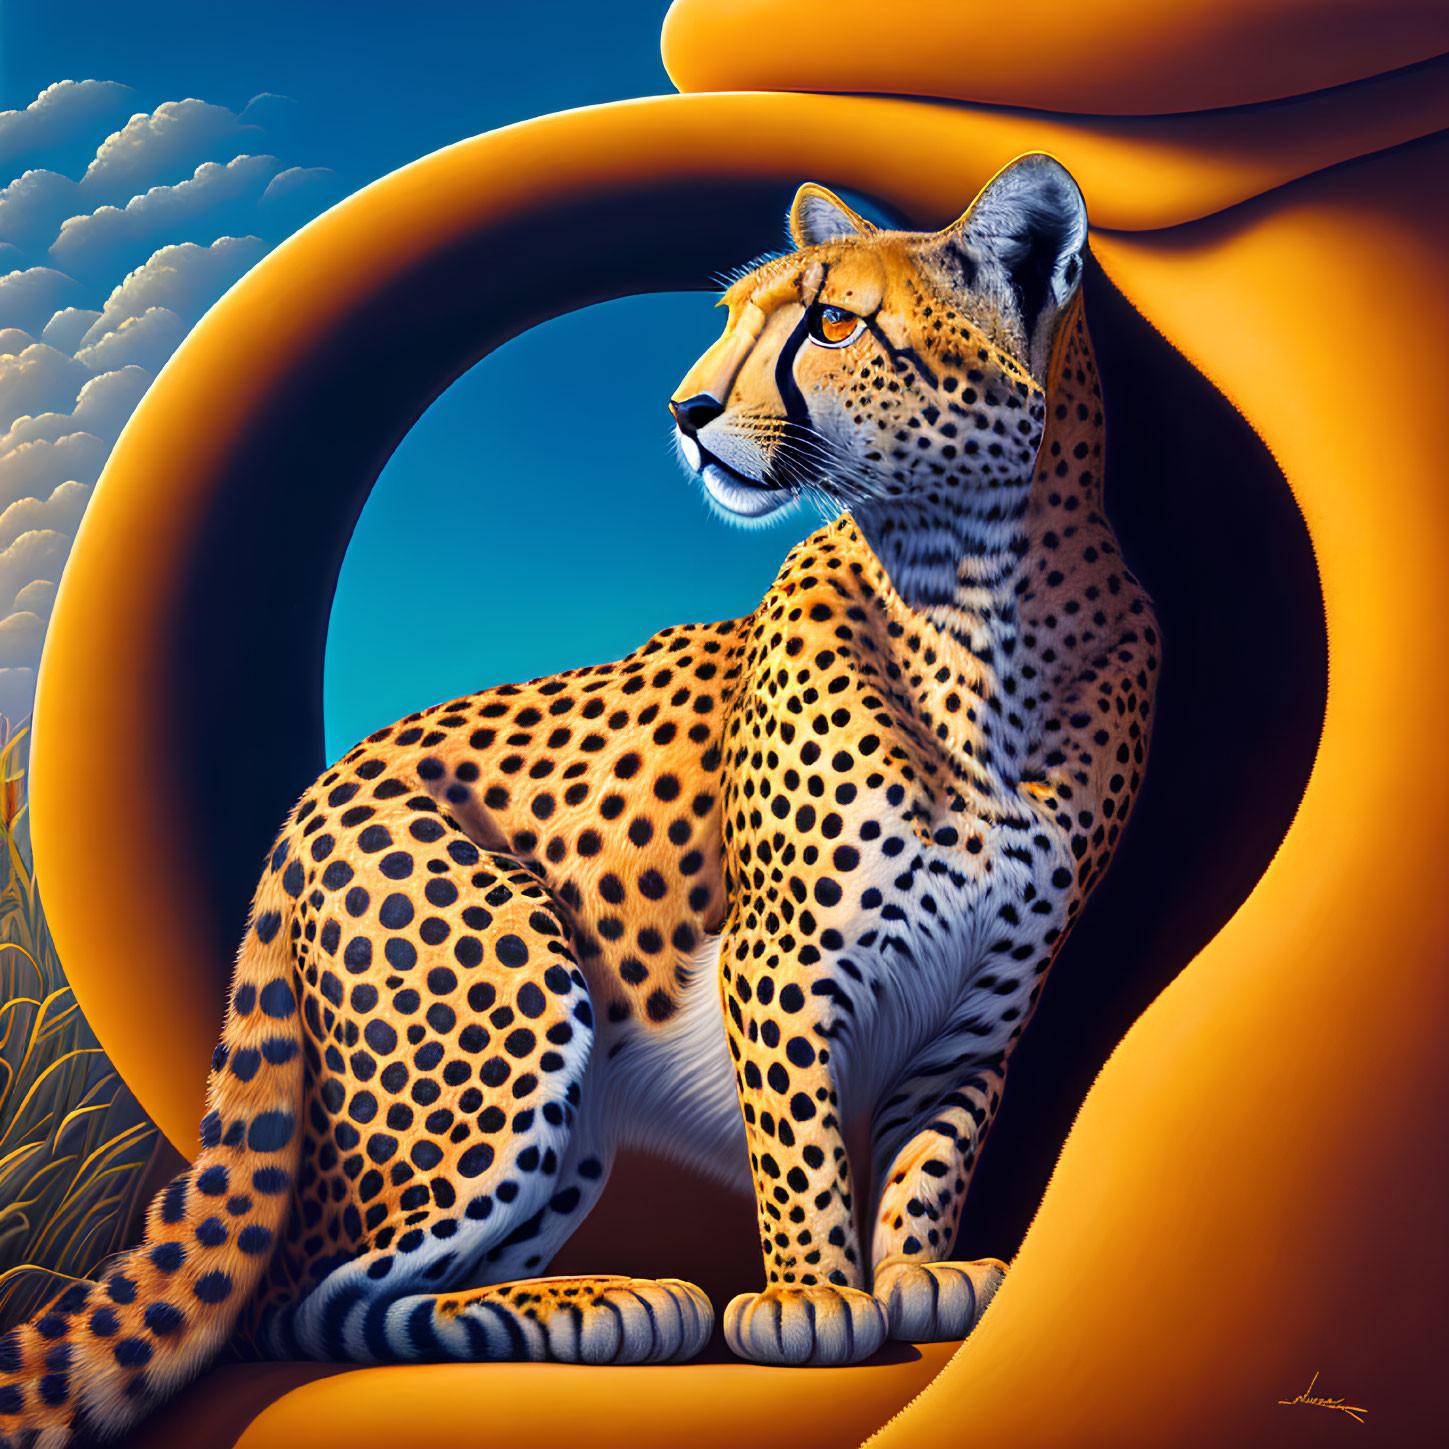 Majestic cheetah under blue sky with golden-orange frame